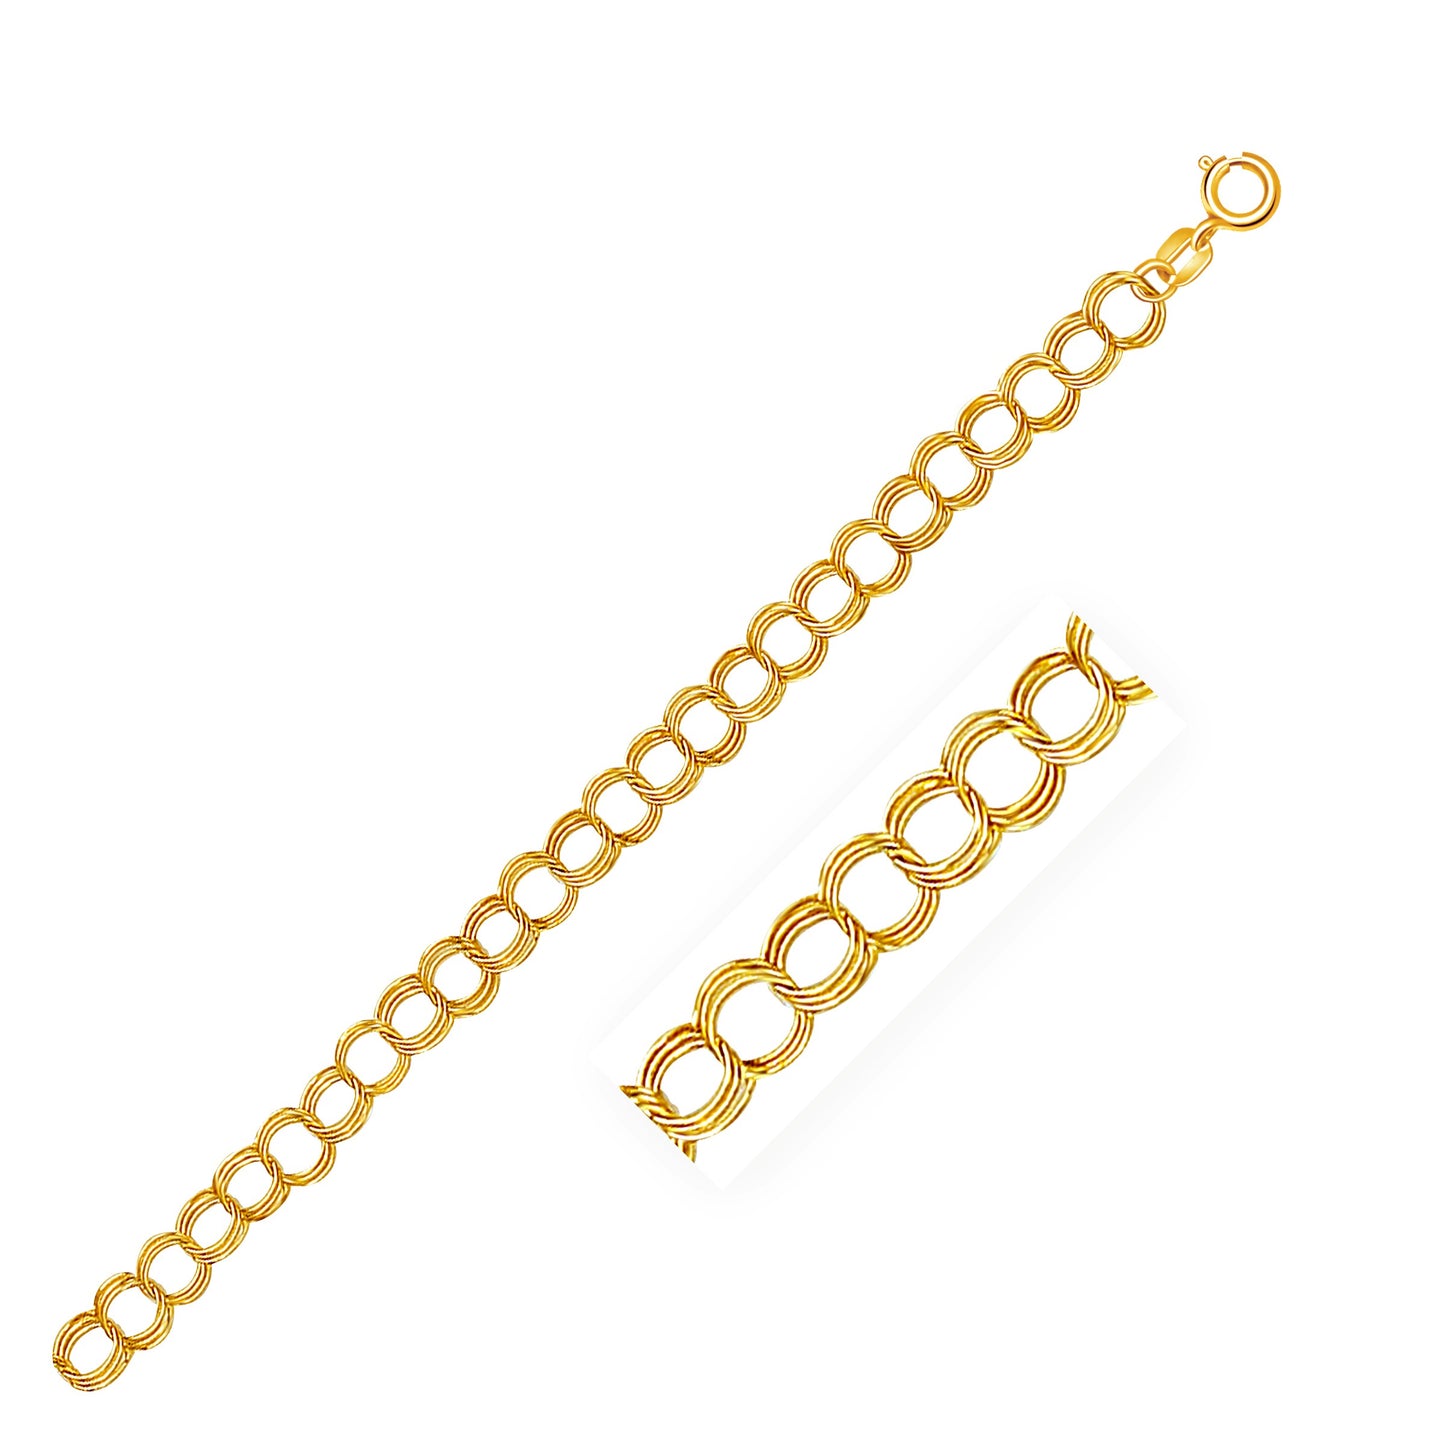 5.0 mm 14k Yellow Gold Triple Link Charm Bracelet